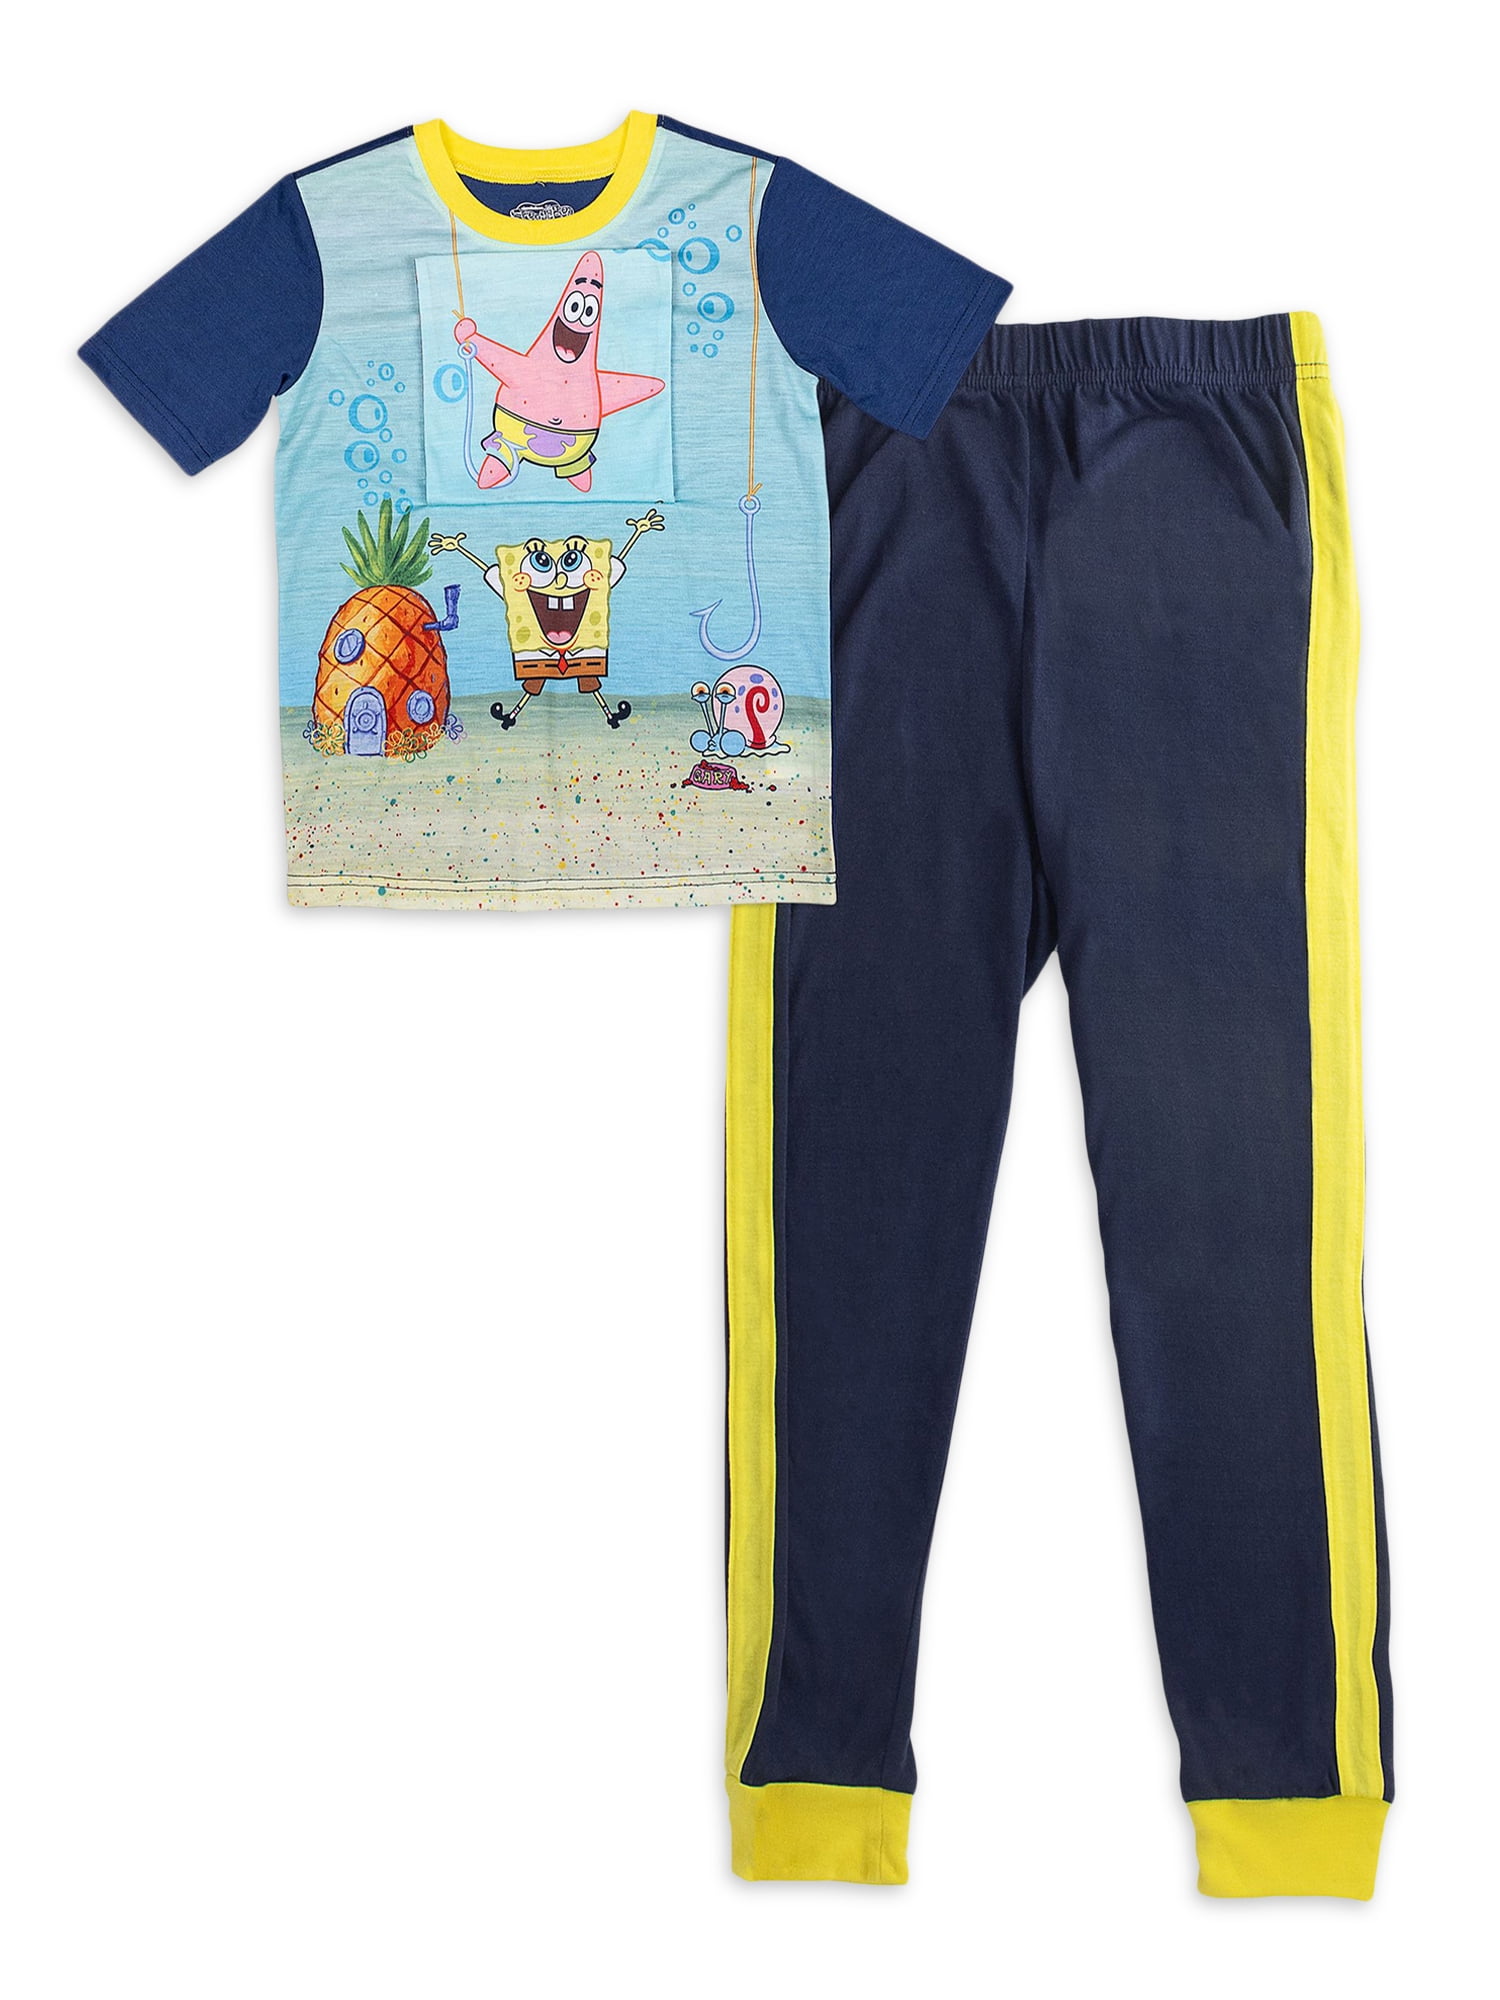 Spongebob Squarepants Pajamas Sleepwear 2pc Set Boys 4 6 8 10 12 New